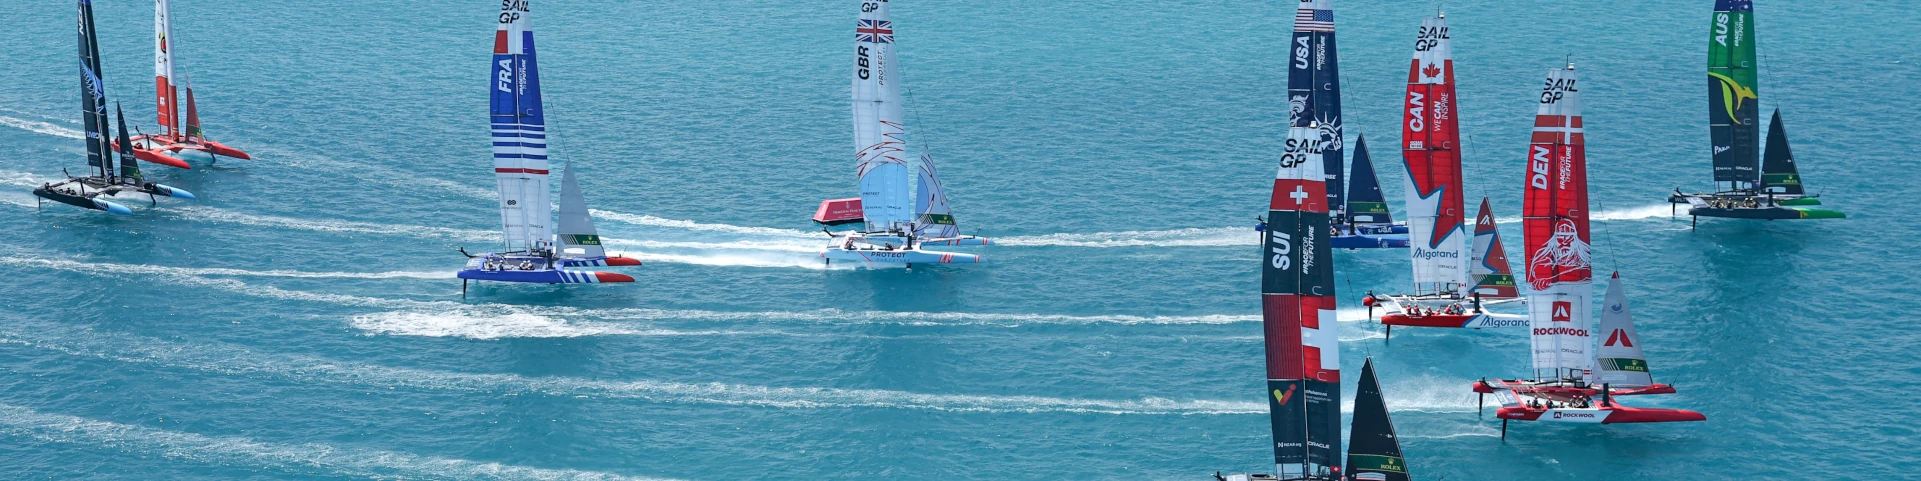 Bermuda Sail Grand Prix Information, Tickets, Live Stream and Broadcast Details SailGP